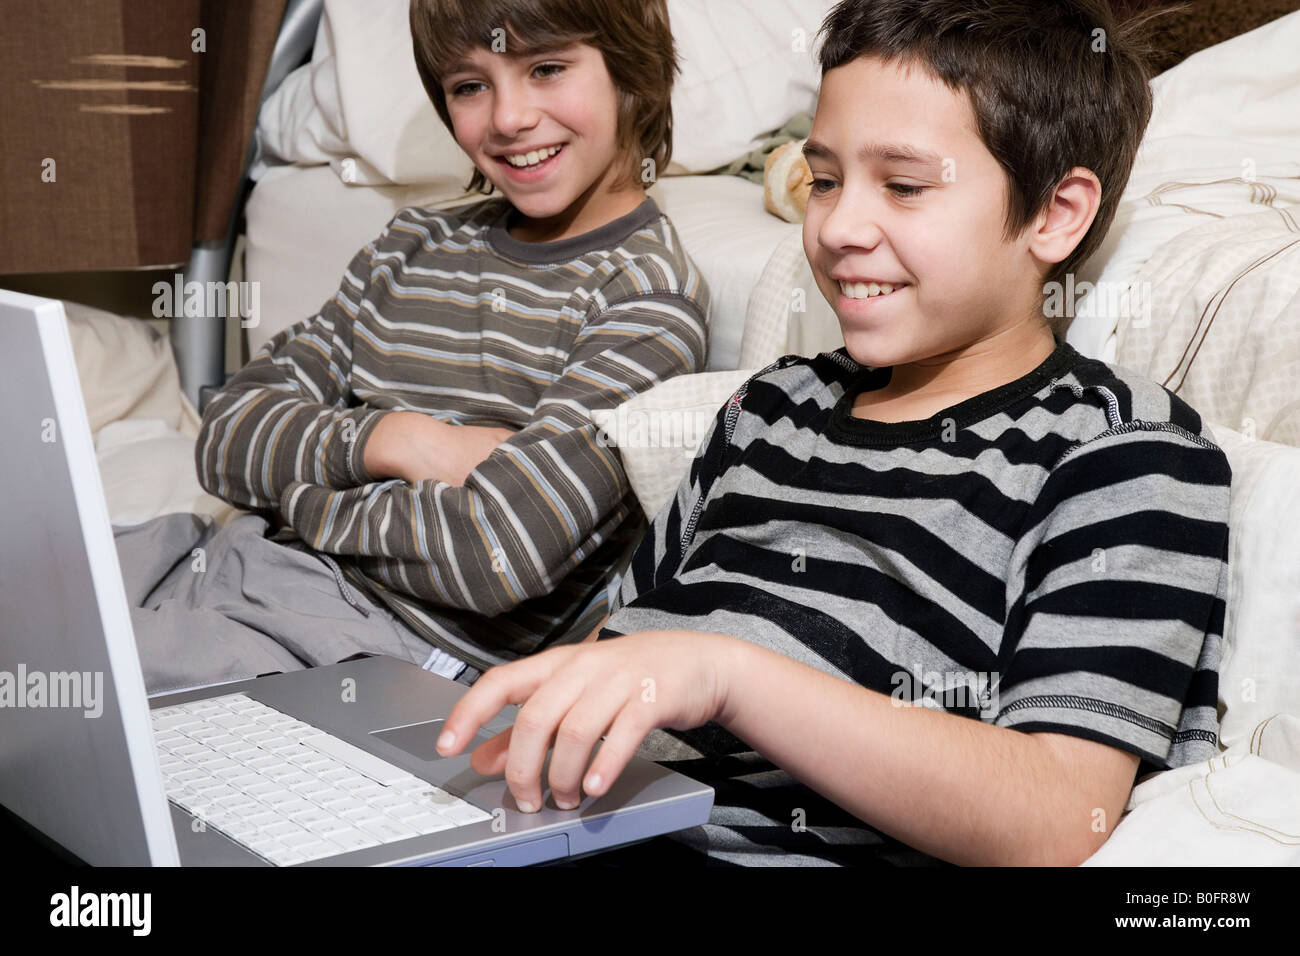 Boys on computer Stock Photo